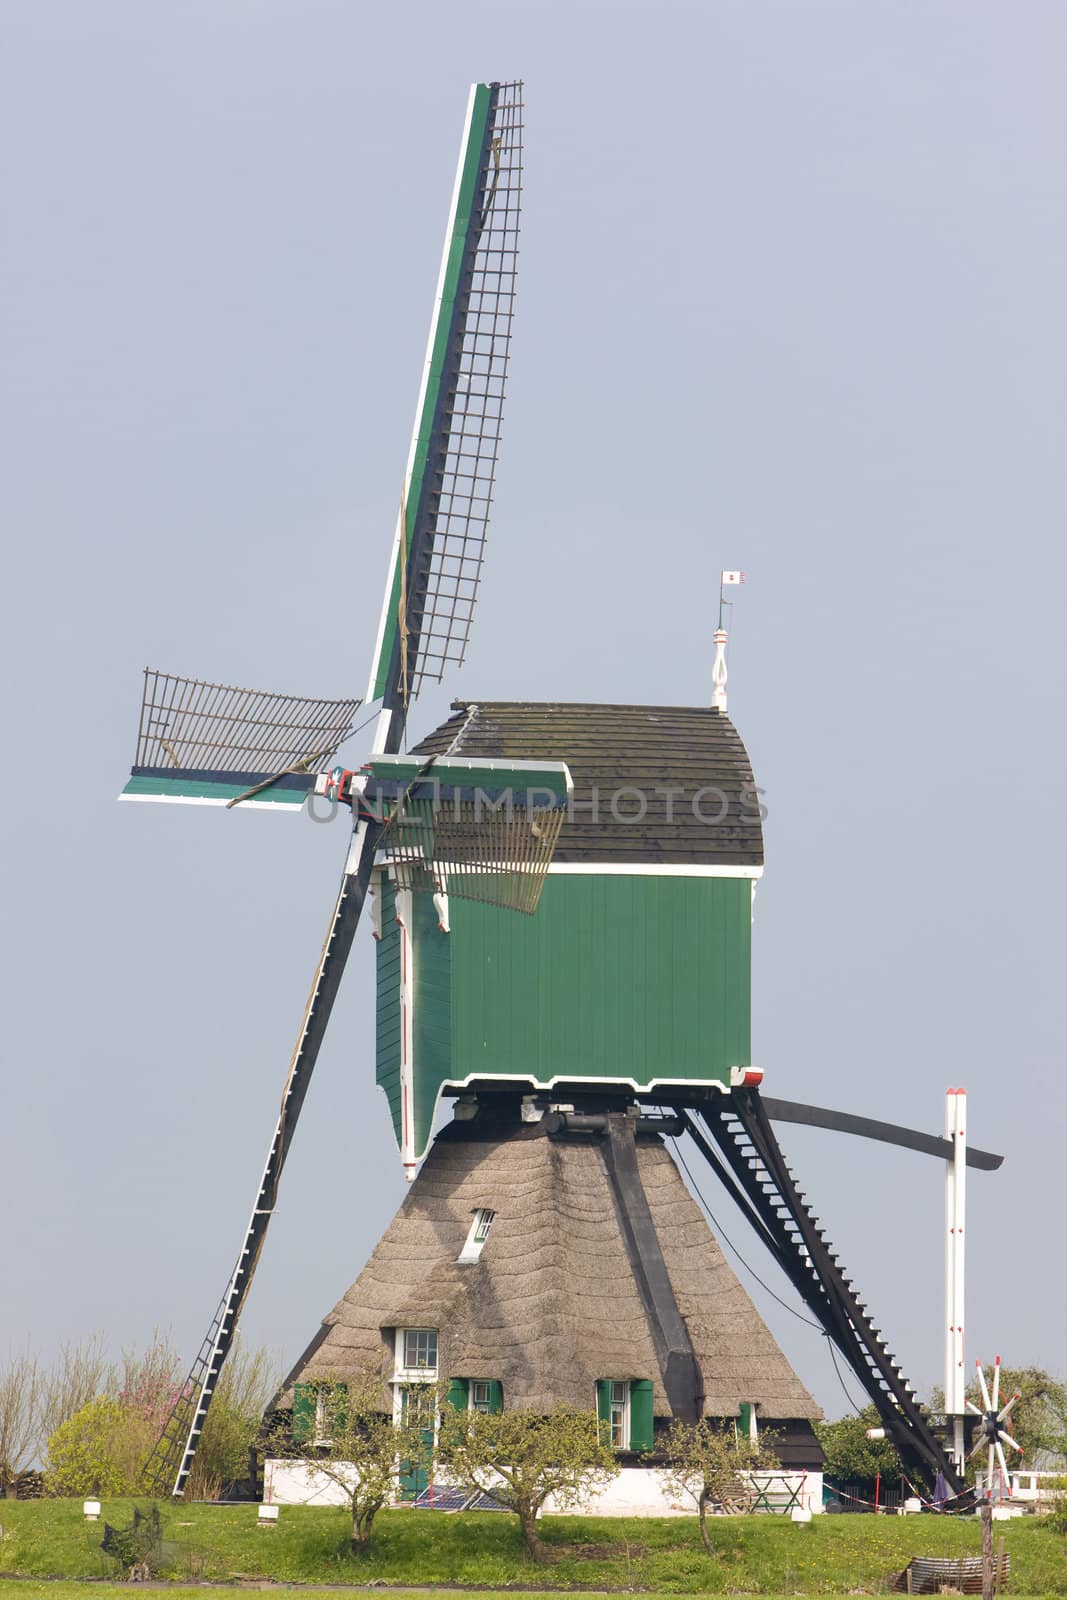 windmill near Vlist, Netherlands by phbcz